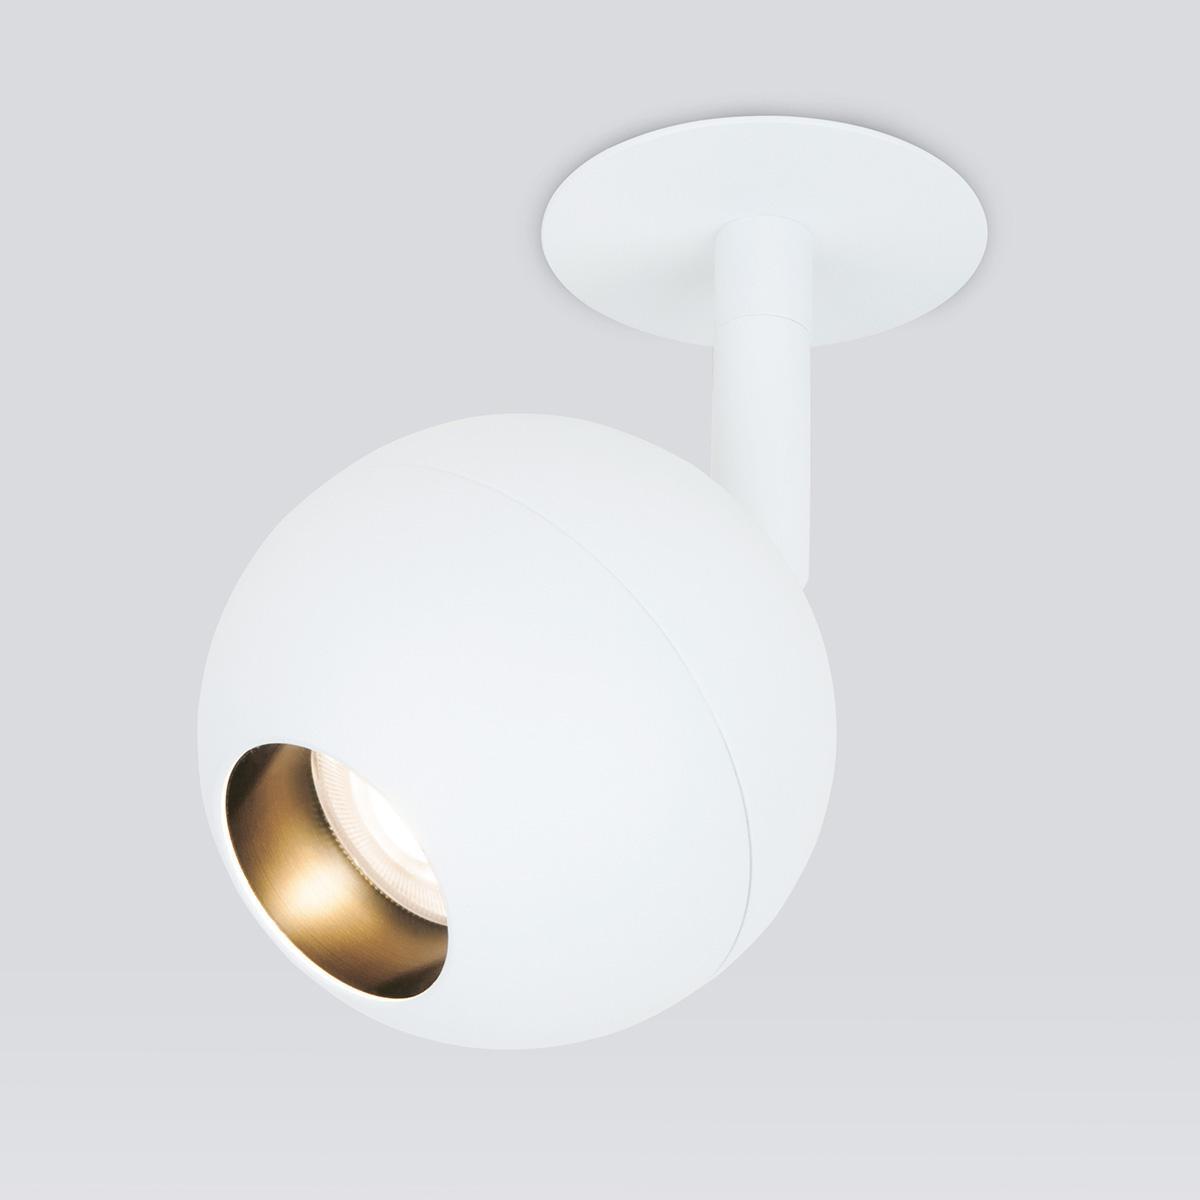 Встраиваемый светодиодный спот Elektrostandard Ball 9925 LED 8W 4200K белый 4690389169809 ball 400 60 730 n